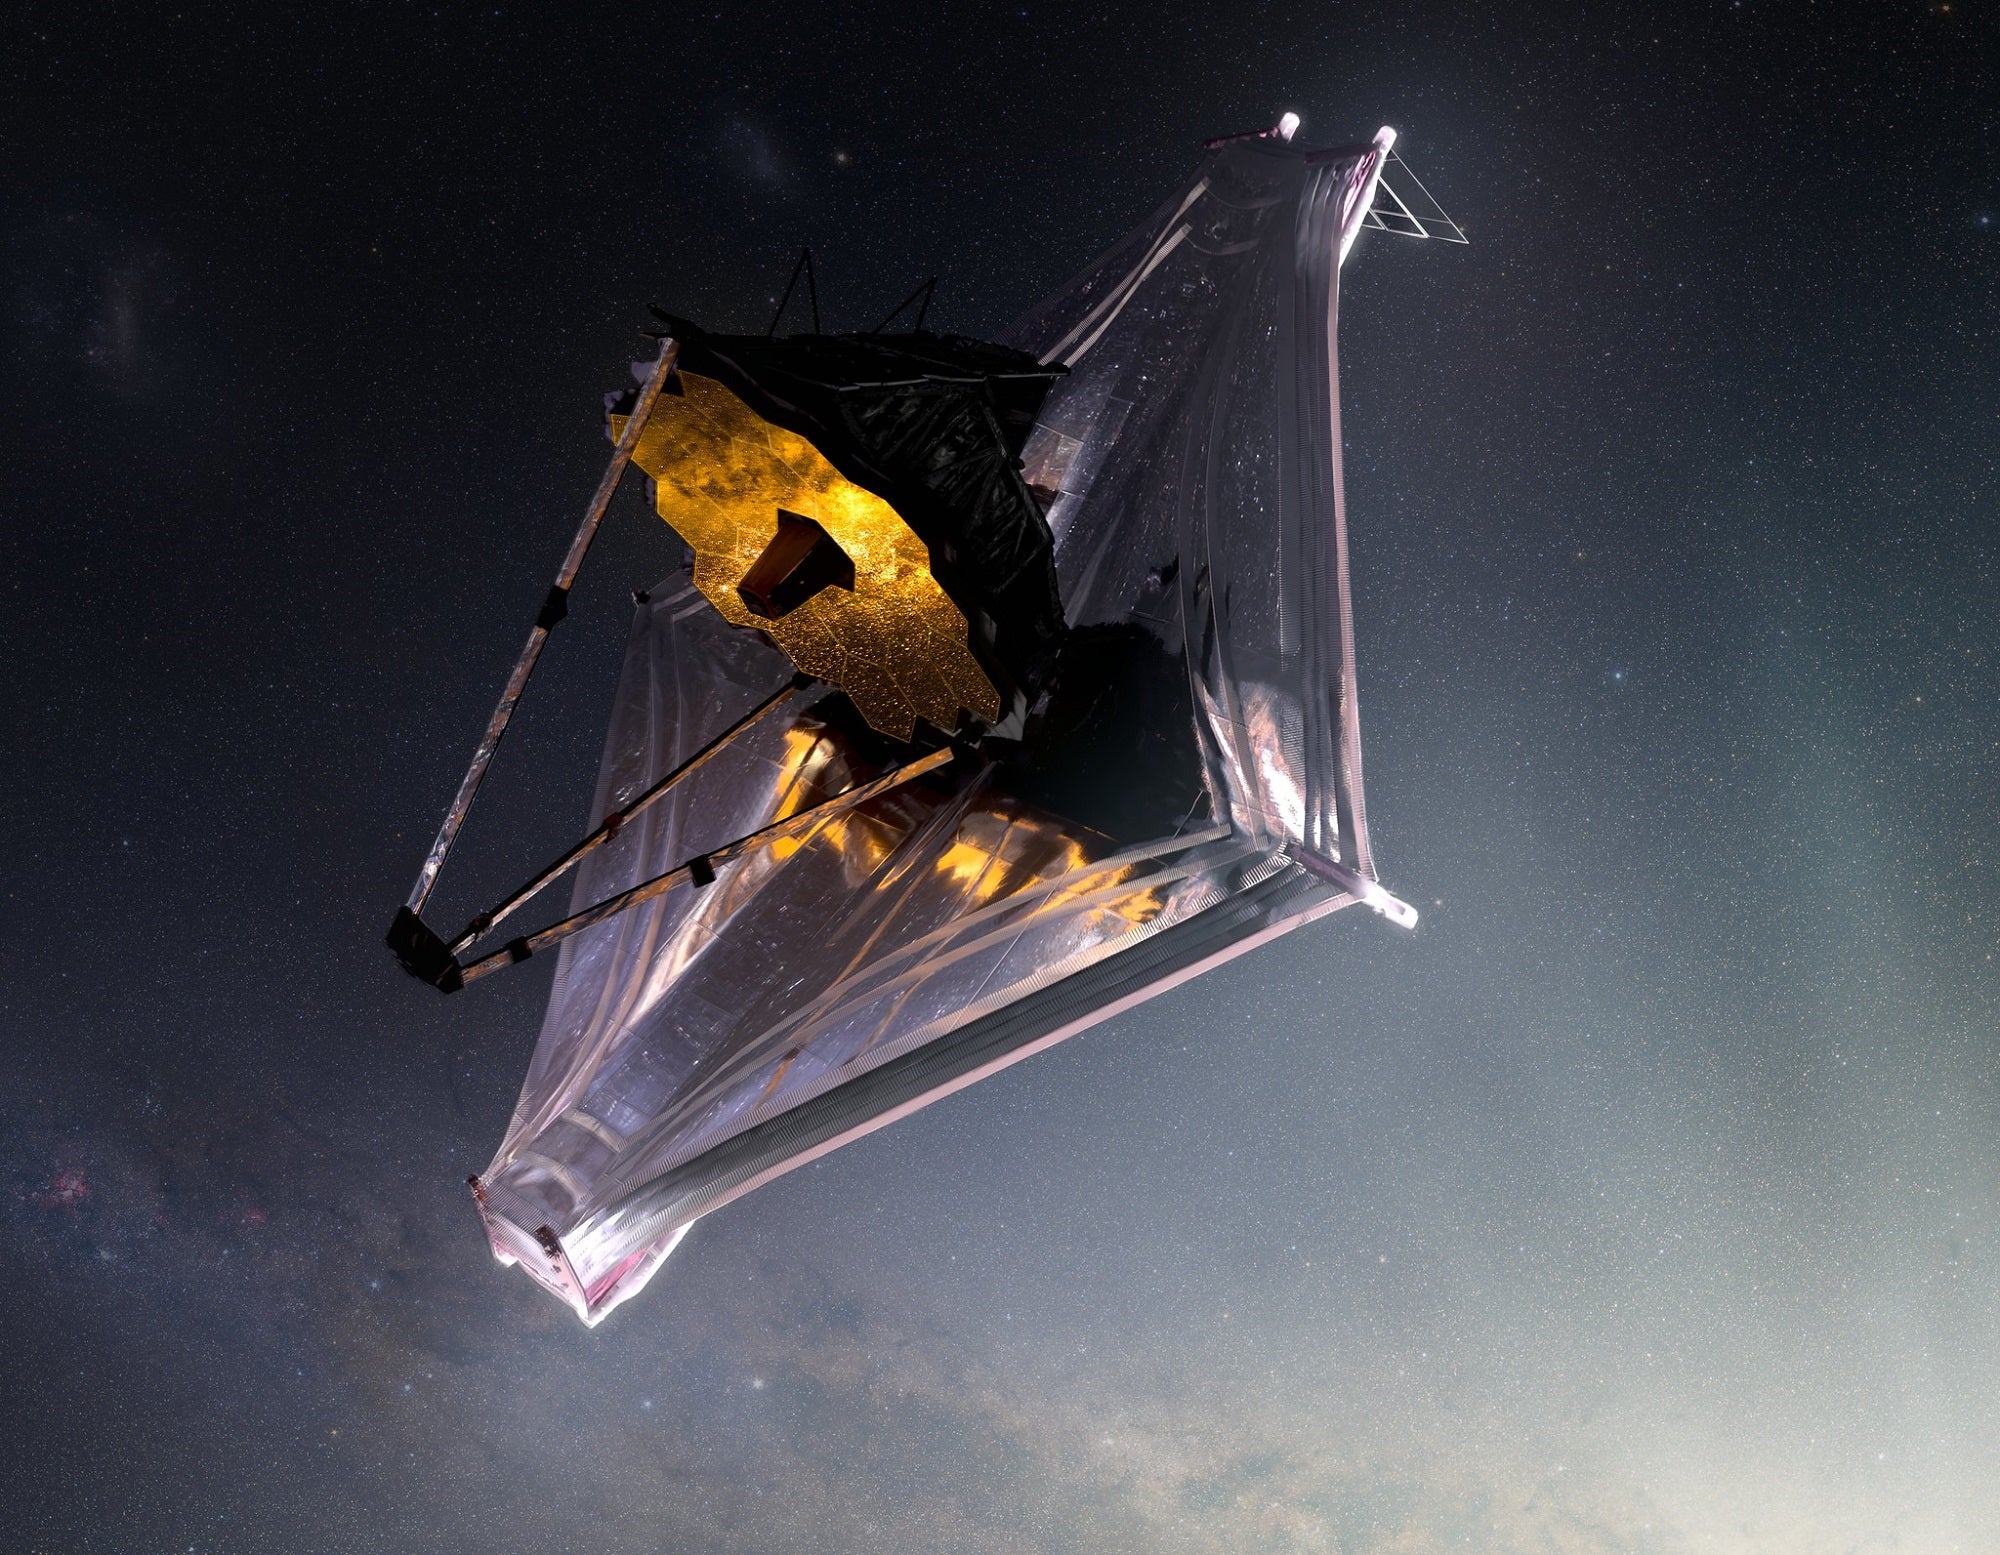 17 photos of the new James Webb Space Telescope